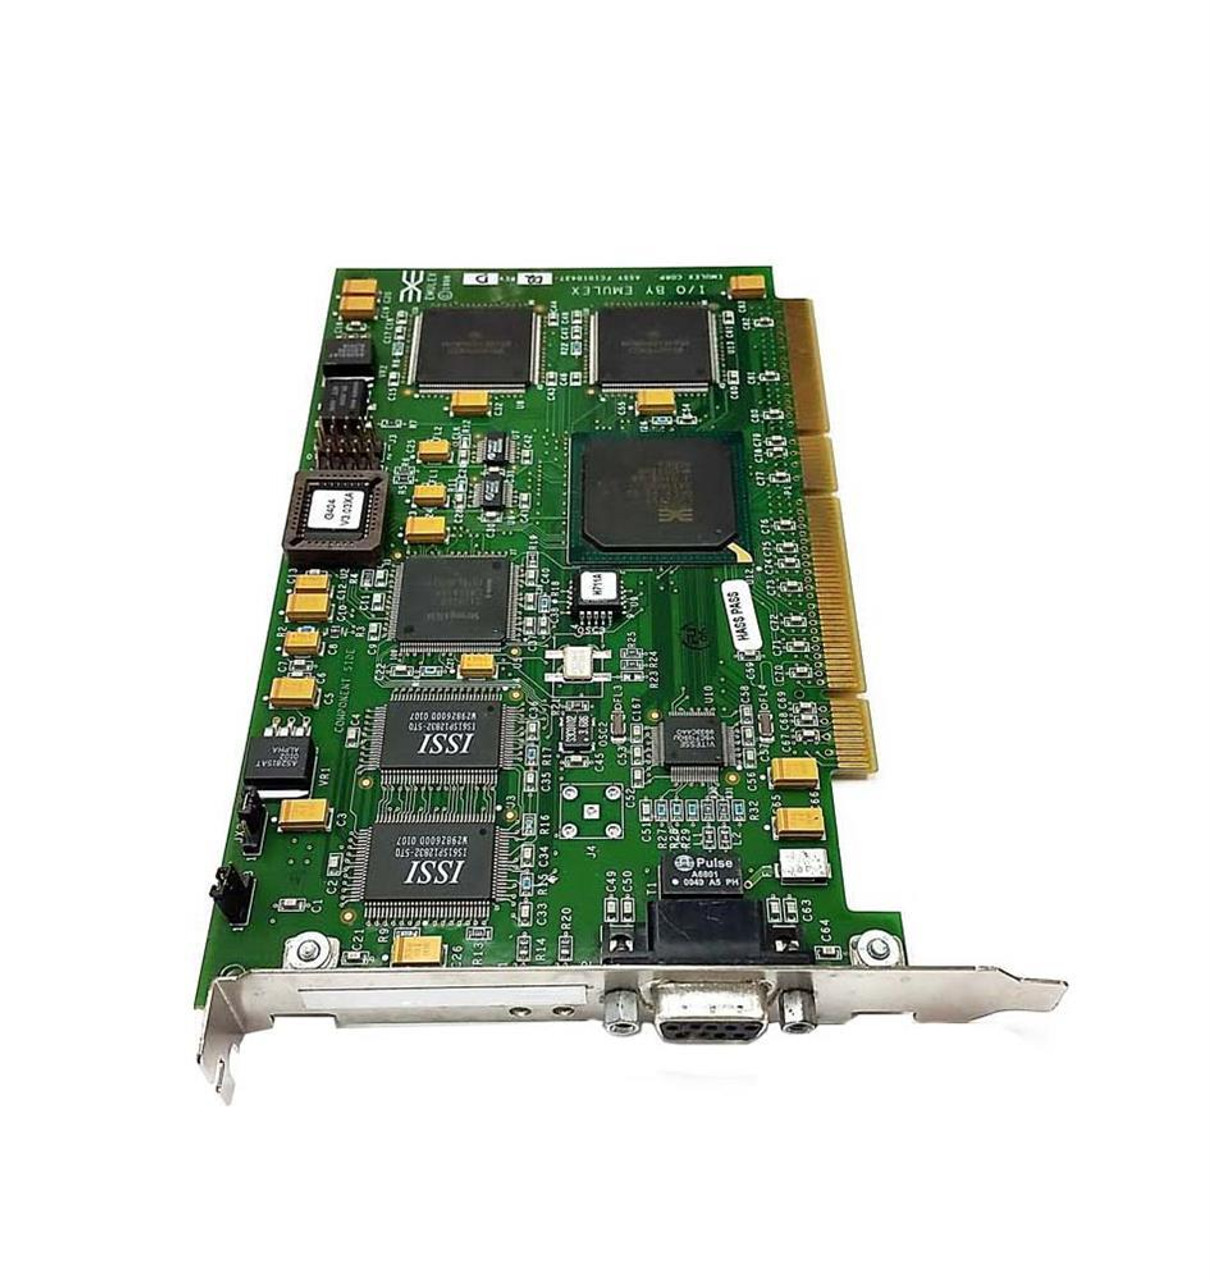 FC1020019-04A Emulex Network 1Gb Fibre Channel 33Mhz PCI Host Bus Adapter